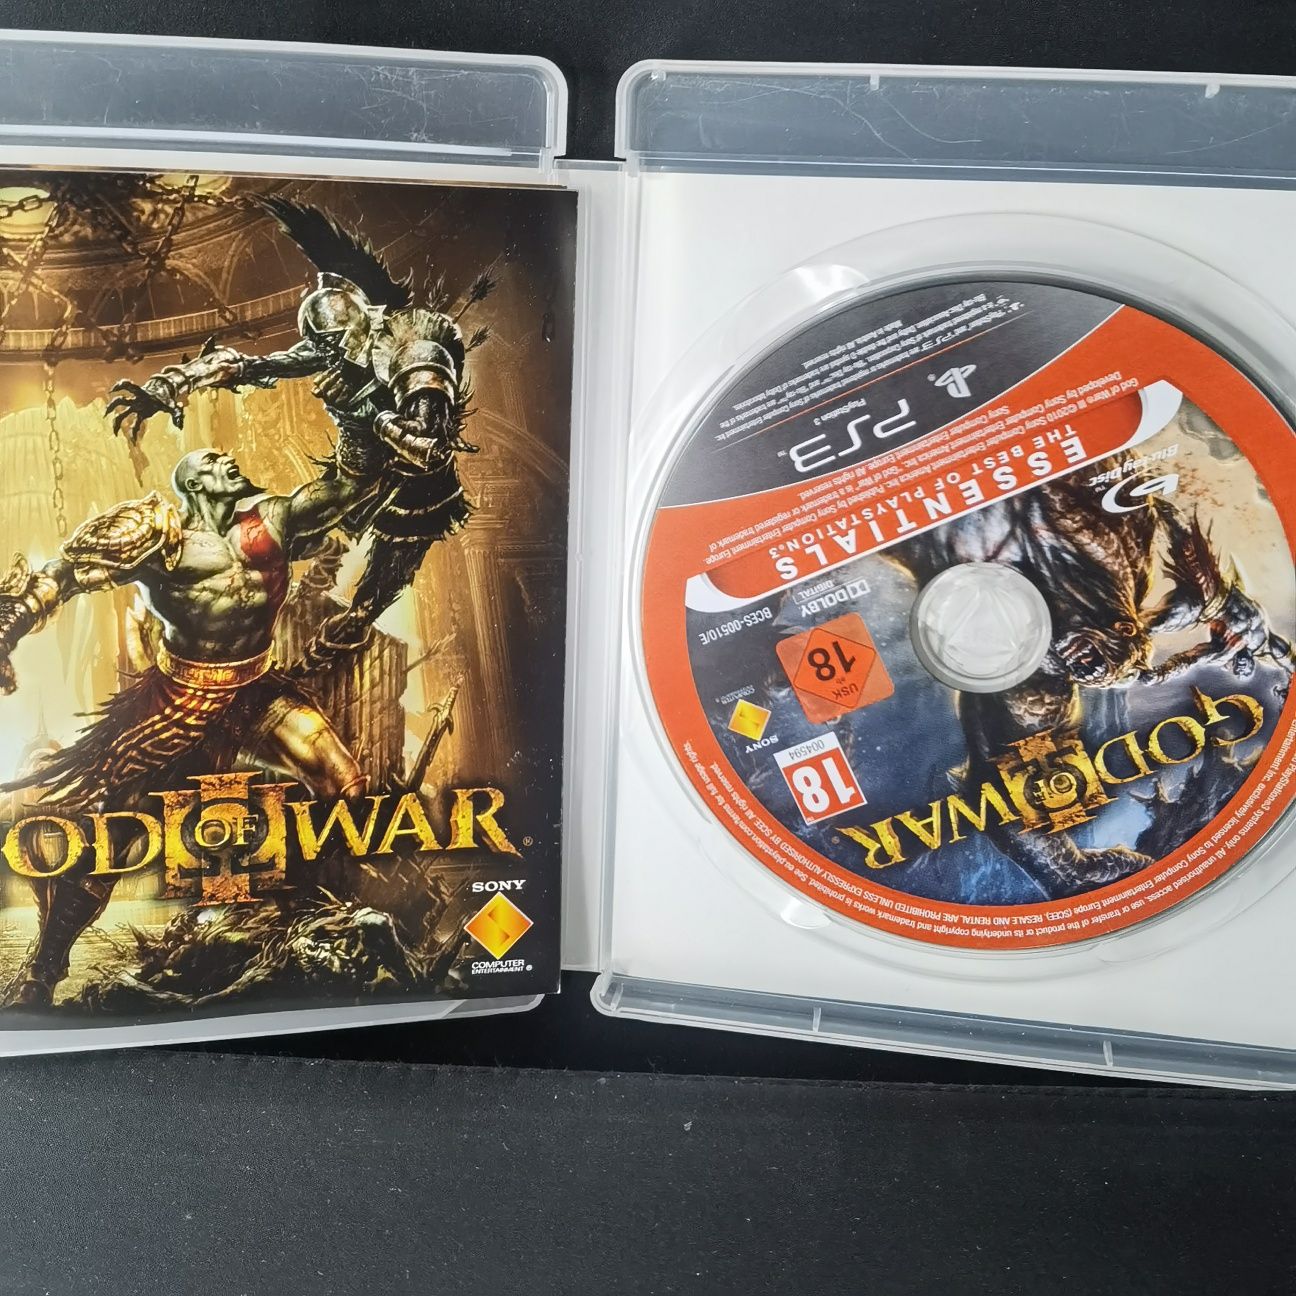 God of War 3 Ps3 Polska edycja